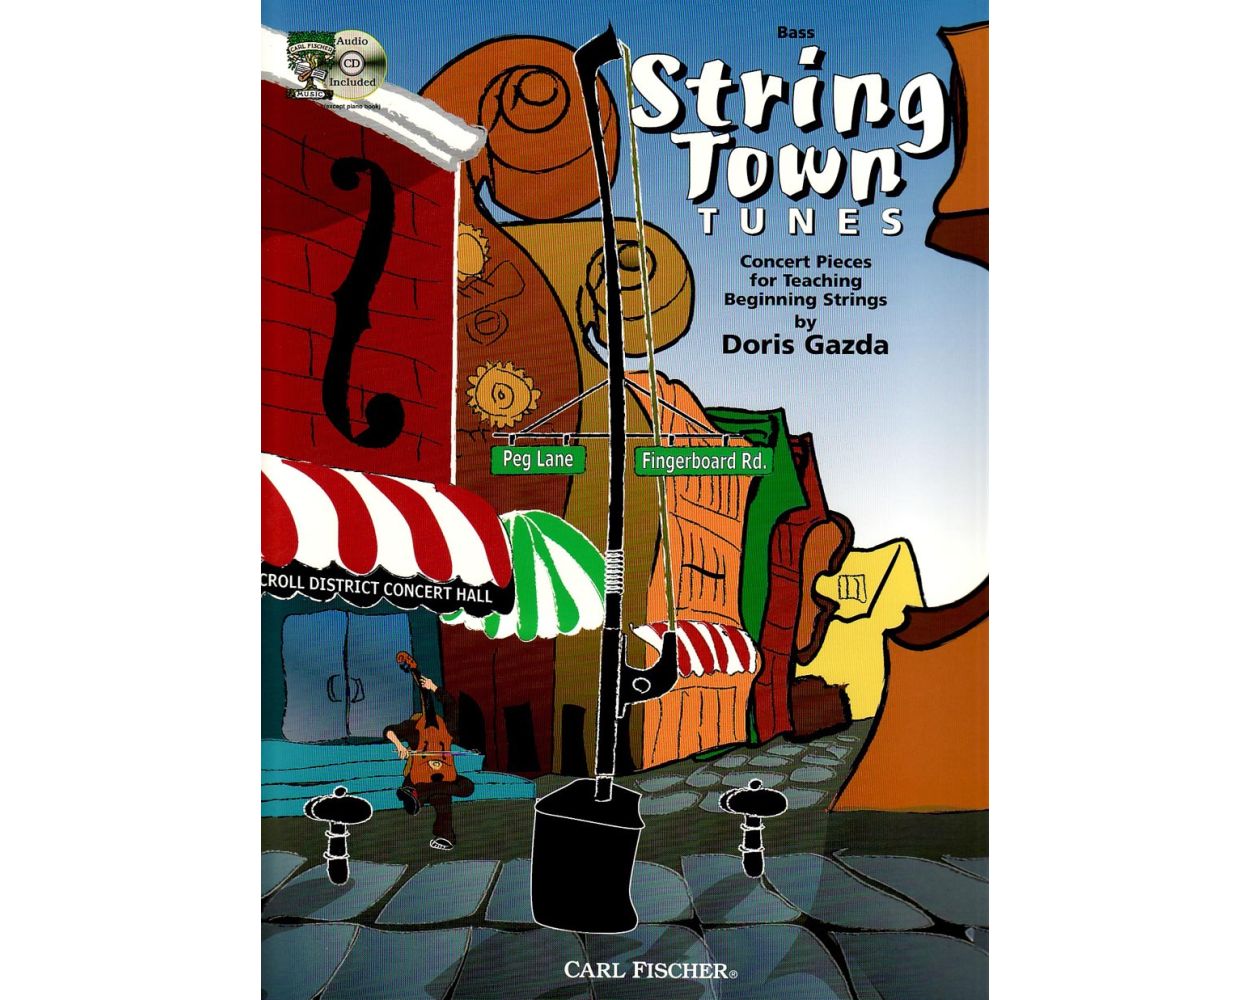 Bass String Town Tunes by Doris Gazda